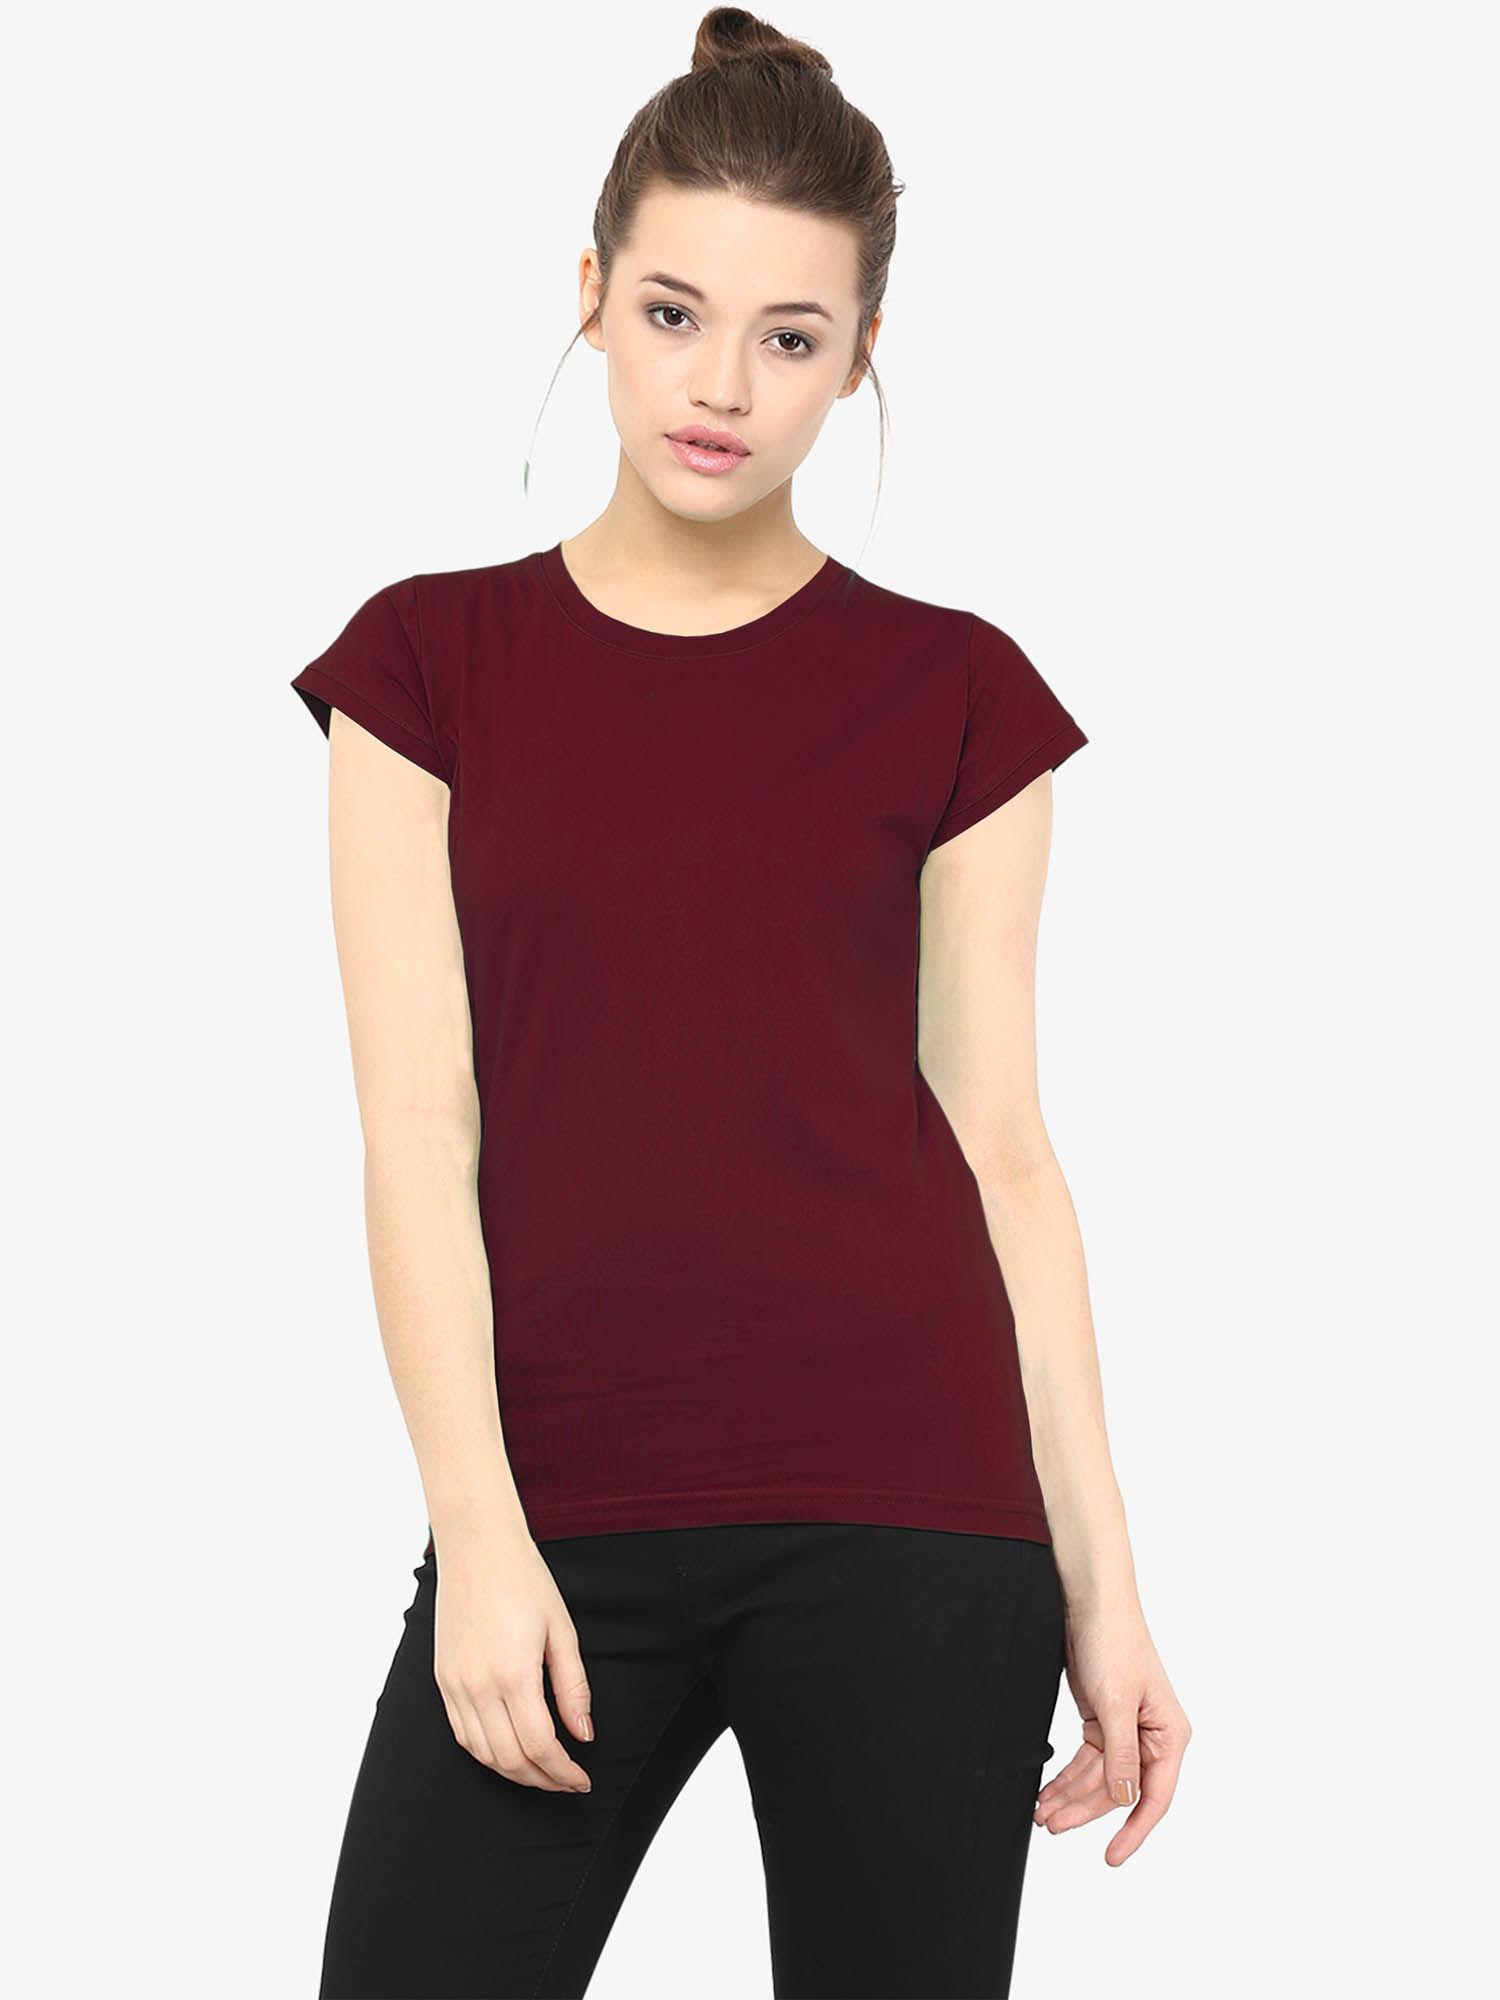 maroon solid t-shirt